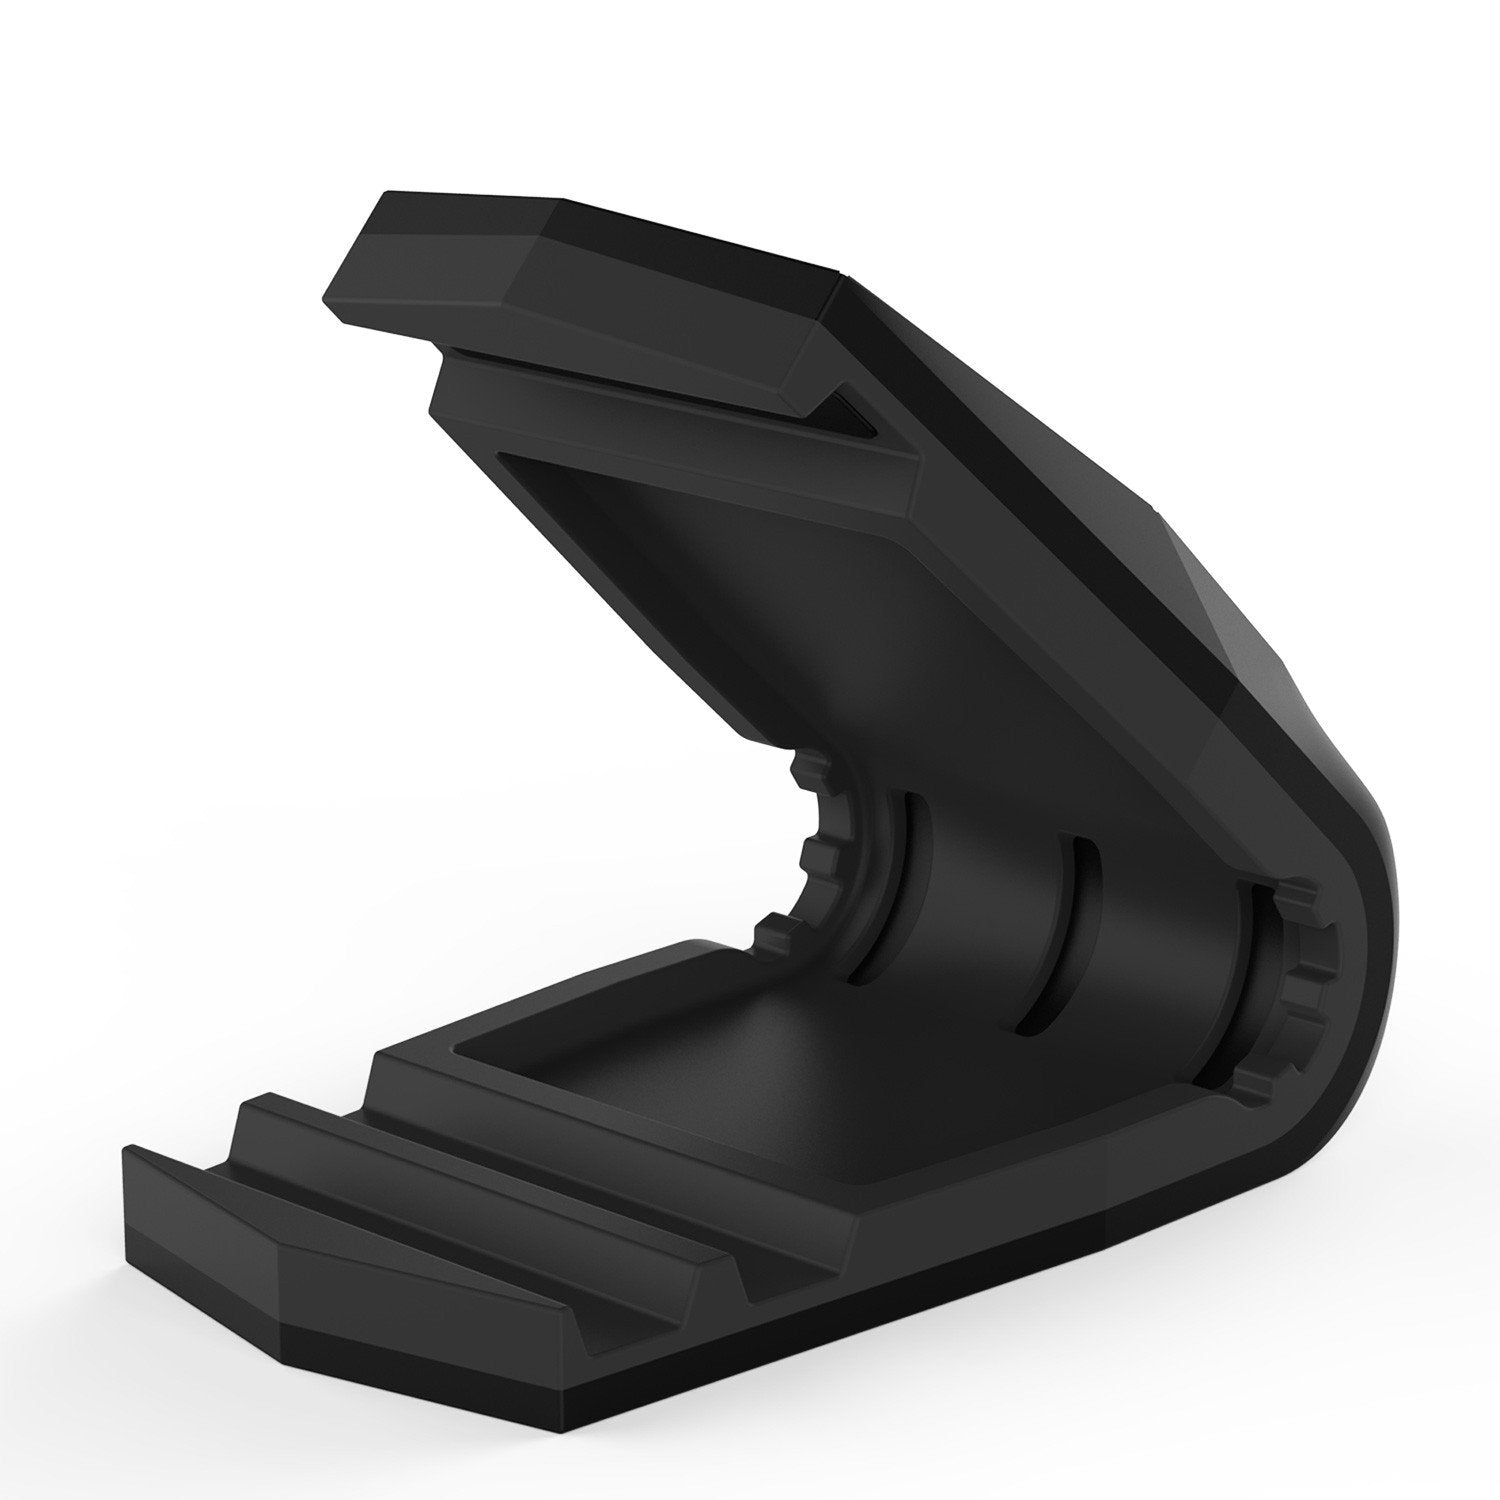 PUNKCASE Viper Car Phone Holder Black, Universal Dashboard Mount for all Smartphones, Low Profile & Sleek Design, One Hand Operation